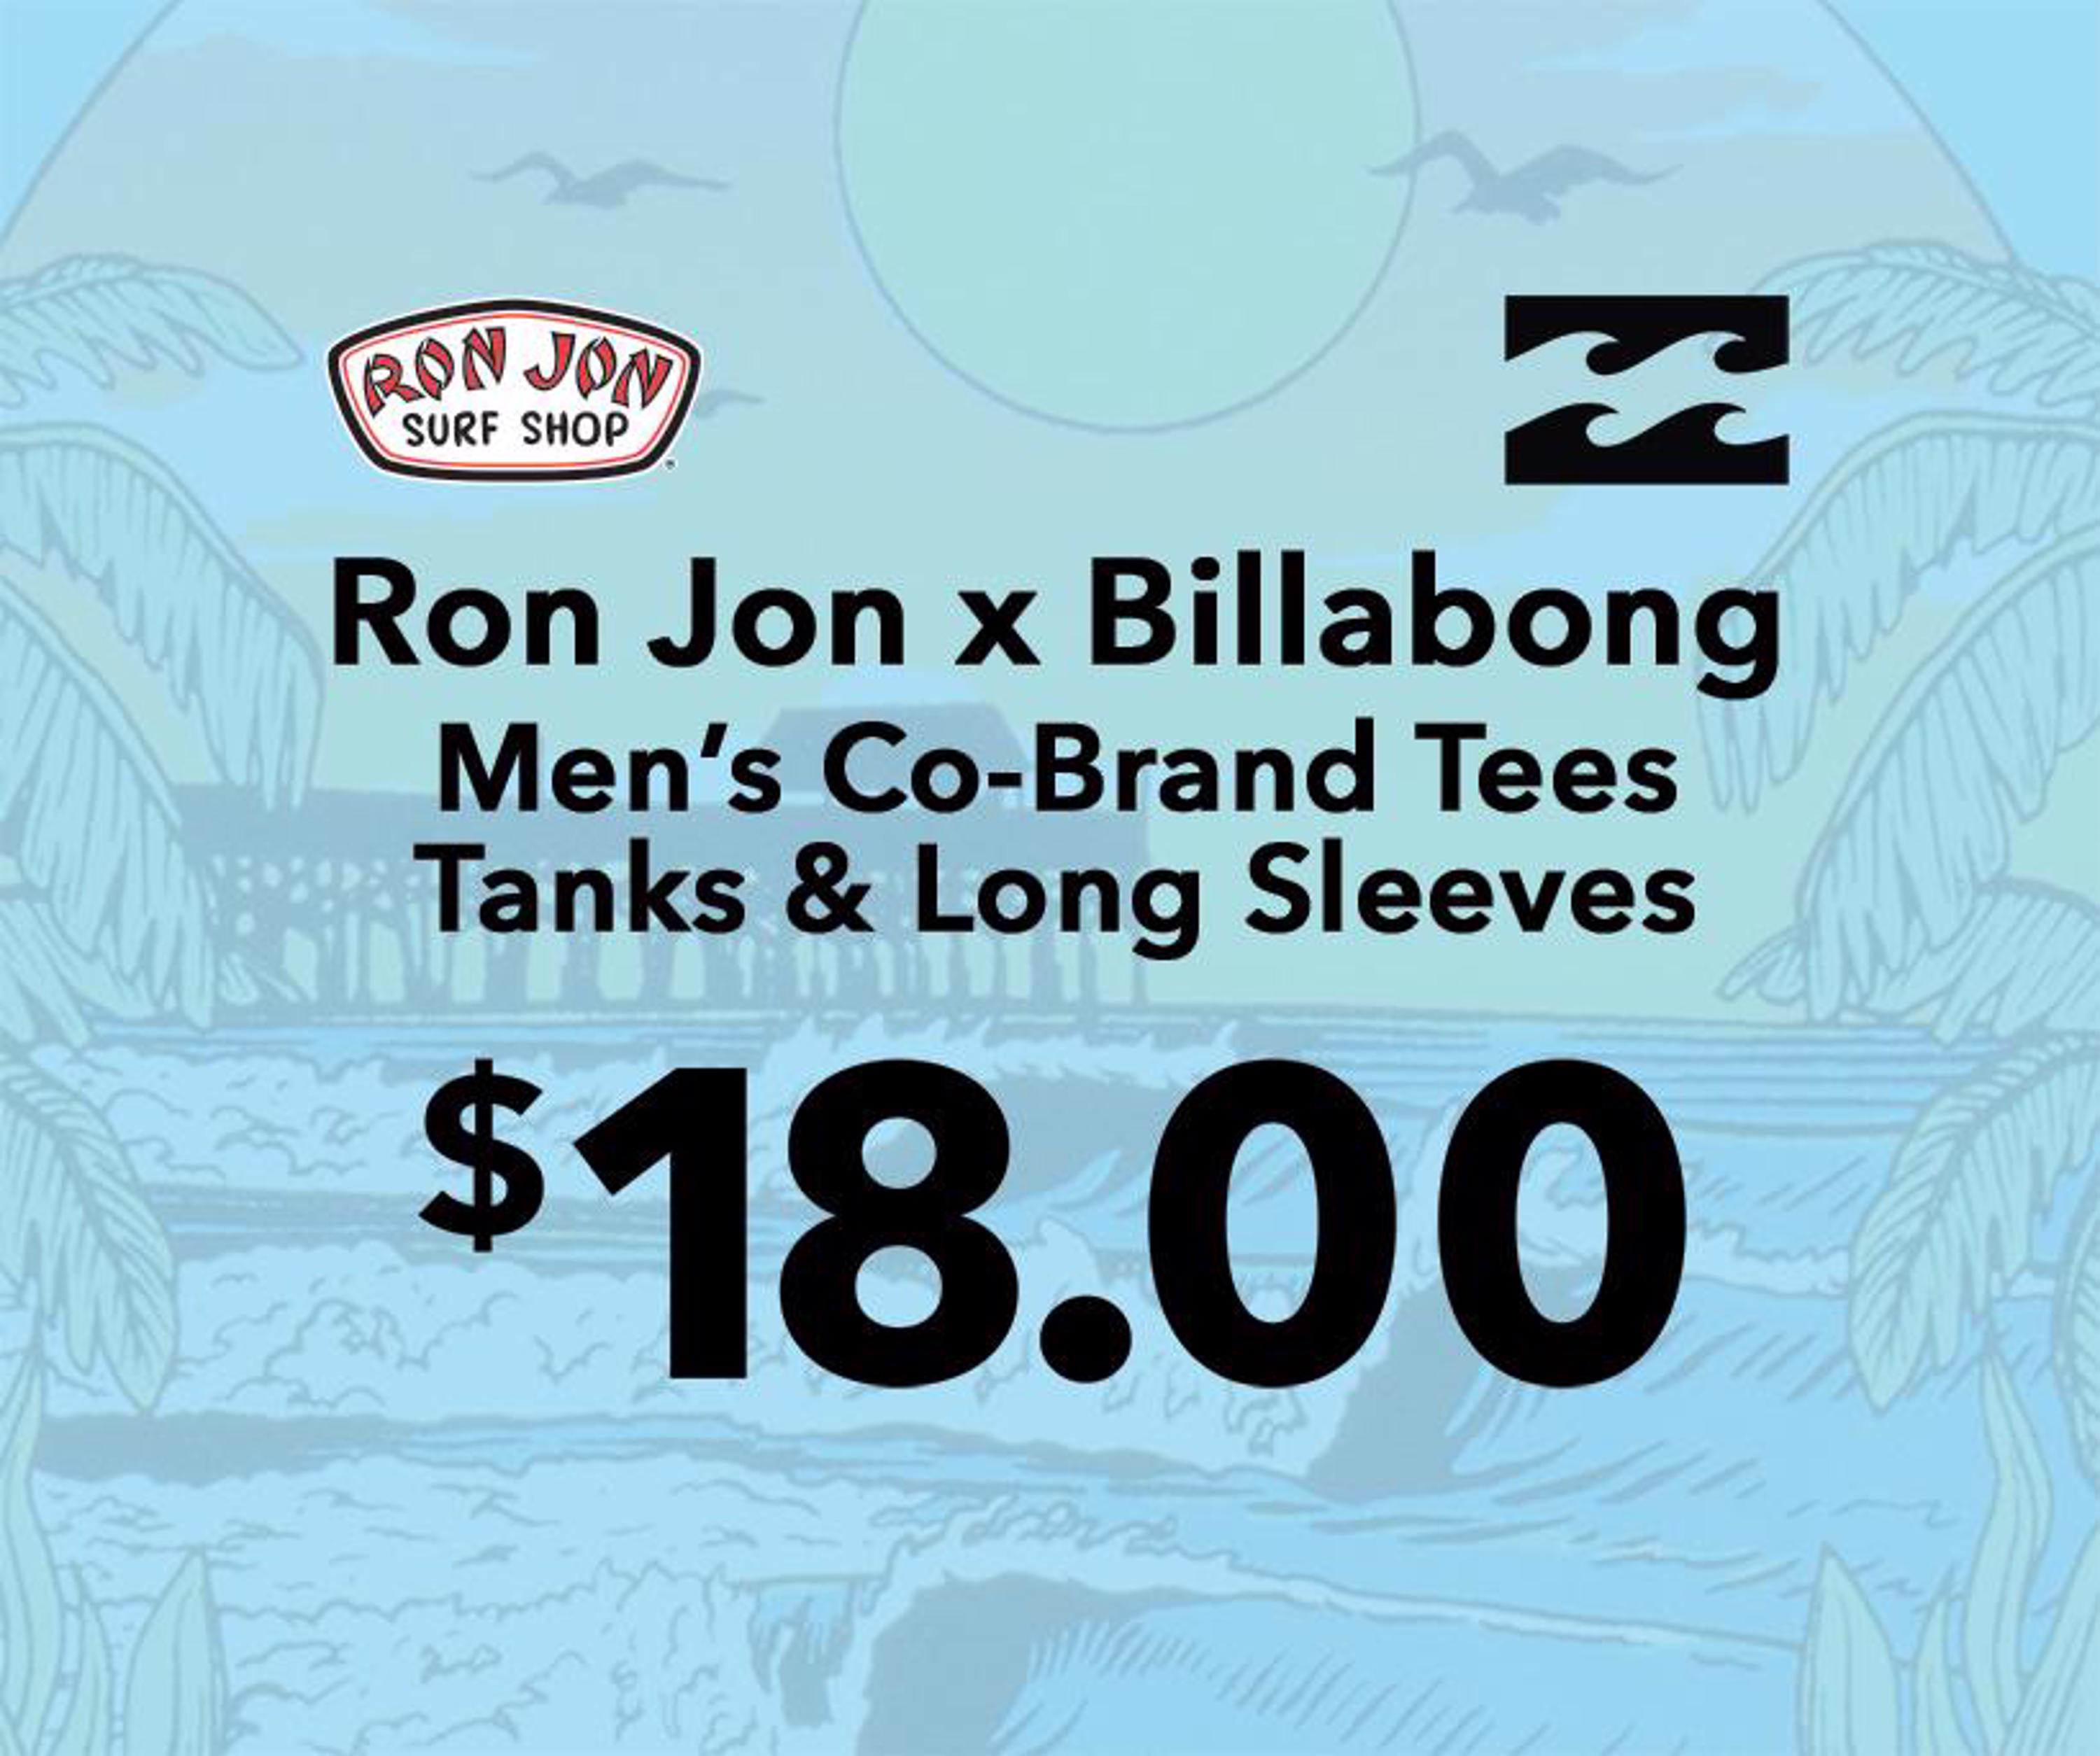 R J x Billabong Collab Shirts $18